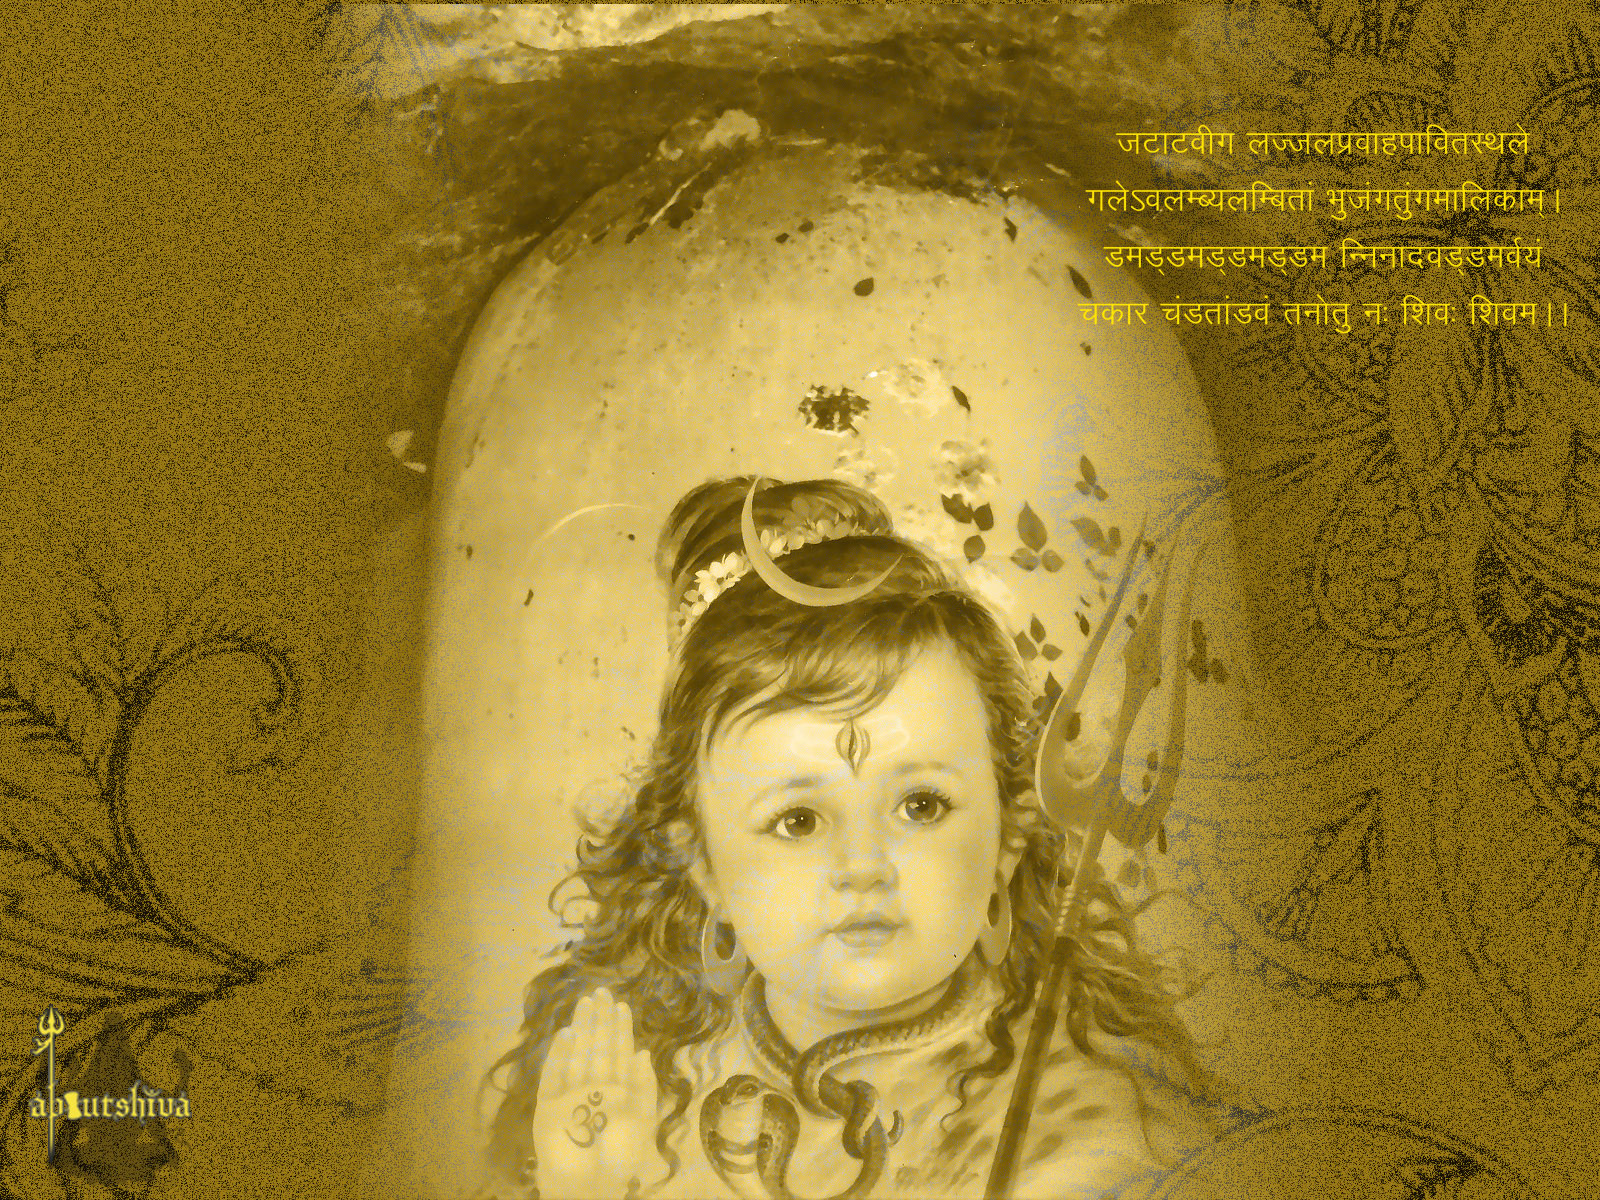 Lord Shiva Wallpaper - Baby Lord Shiva - 1600x1200 Wallpaper 